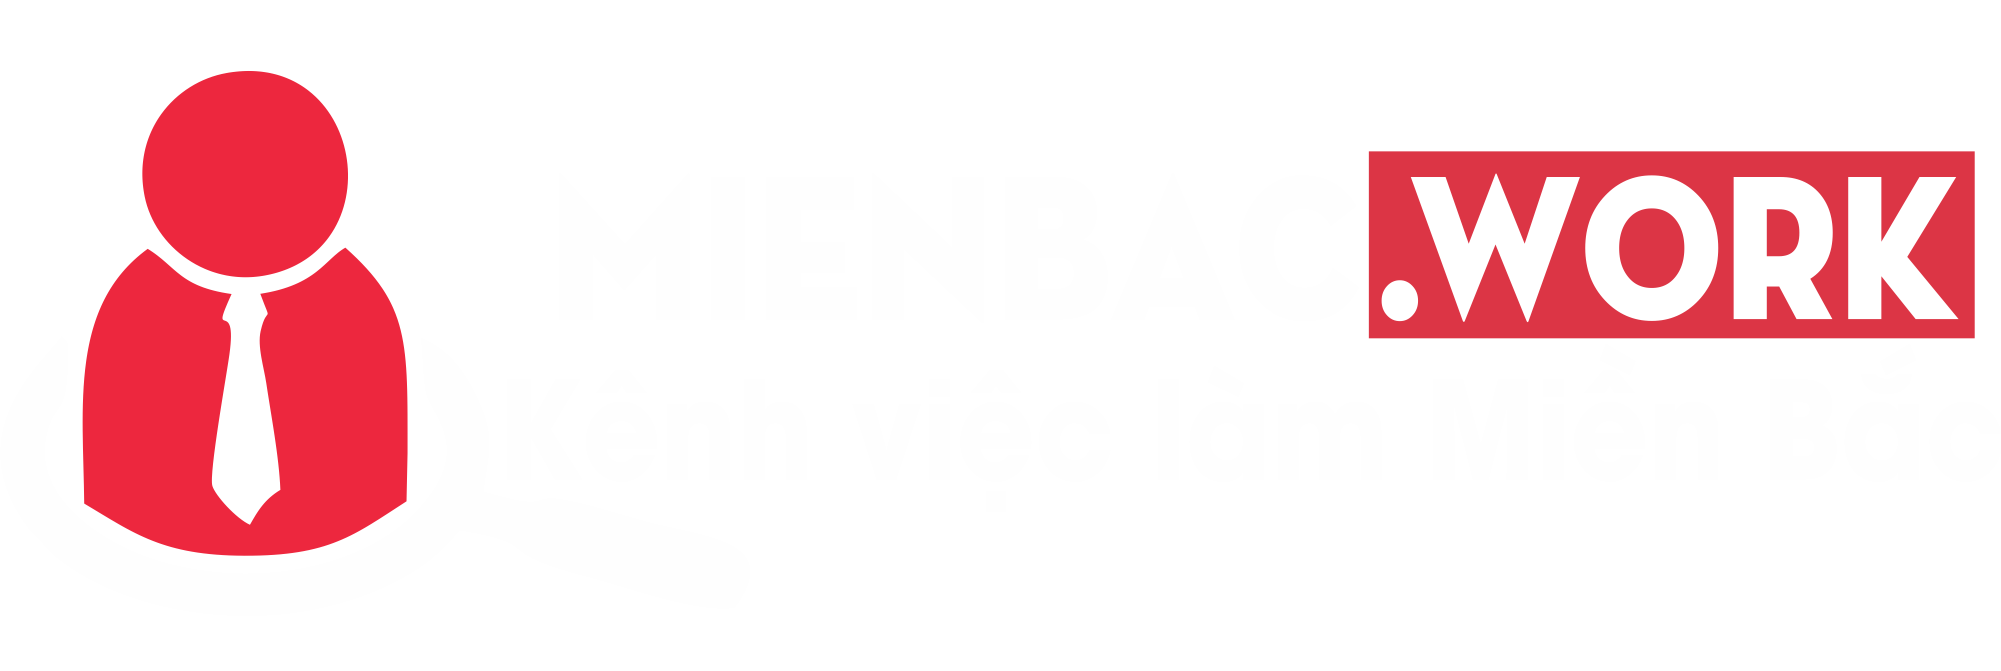 Logo Mien Bac Work Am Ban